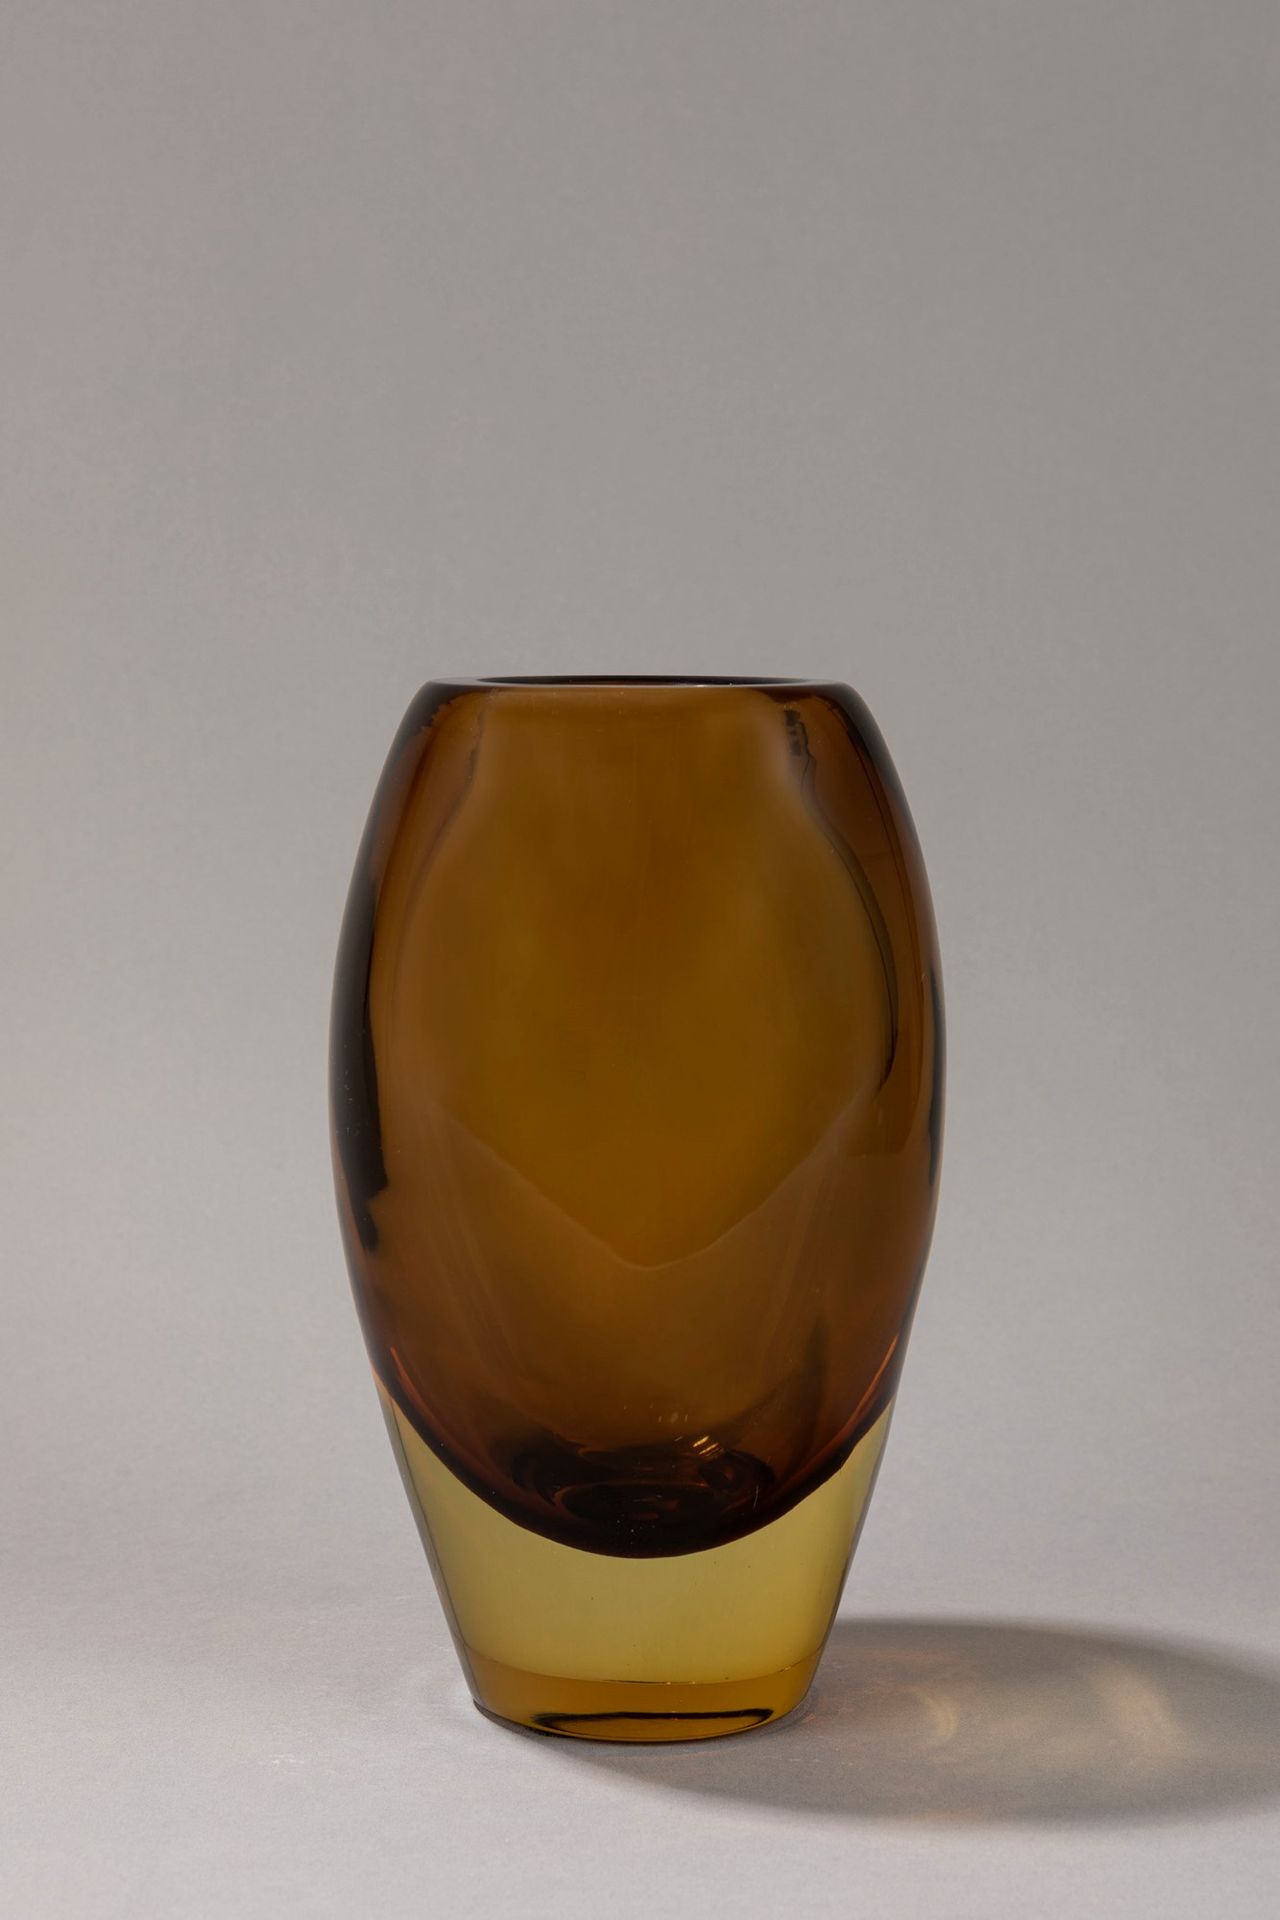 SEGUSO Vase, 1950 ca.

H 27 x diam 11 cm 
sommerso glass